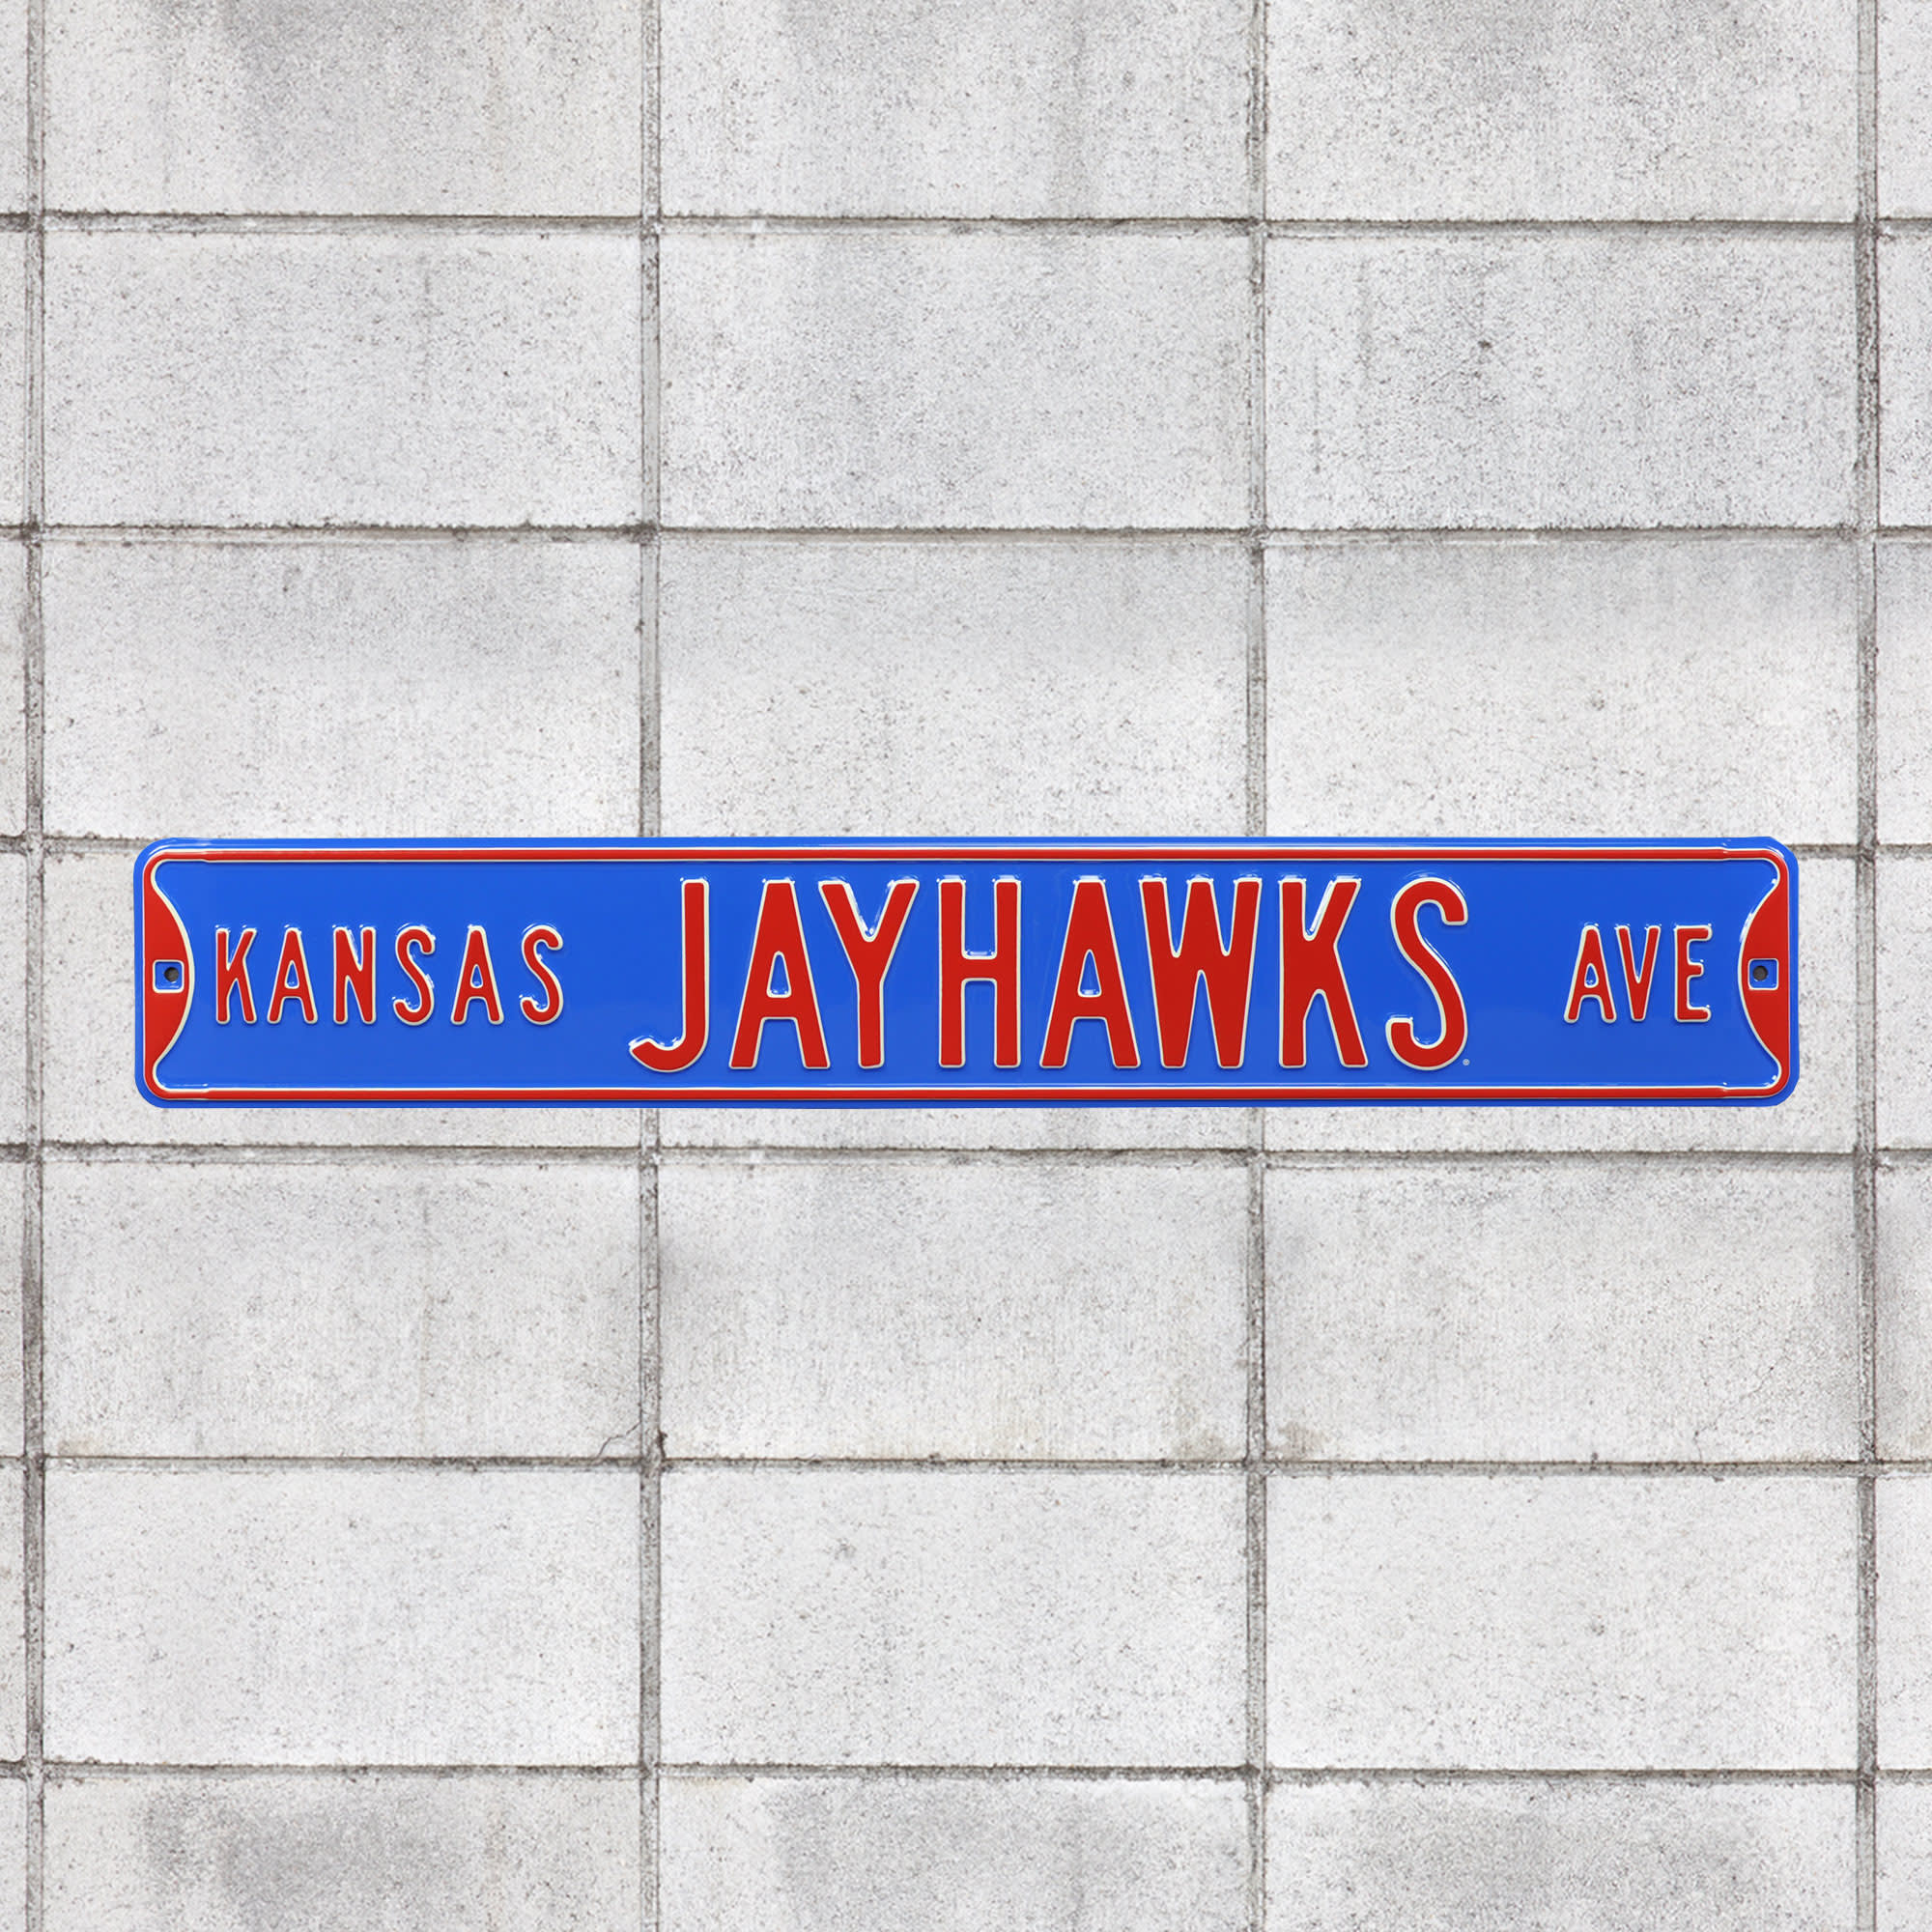 Kansas Jayhawks: Kansas Jayhawks Avenue - Officially Licensed Metal Street Sign by Fathead | 100% Steel